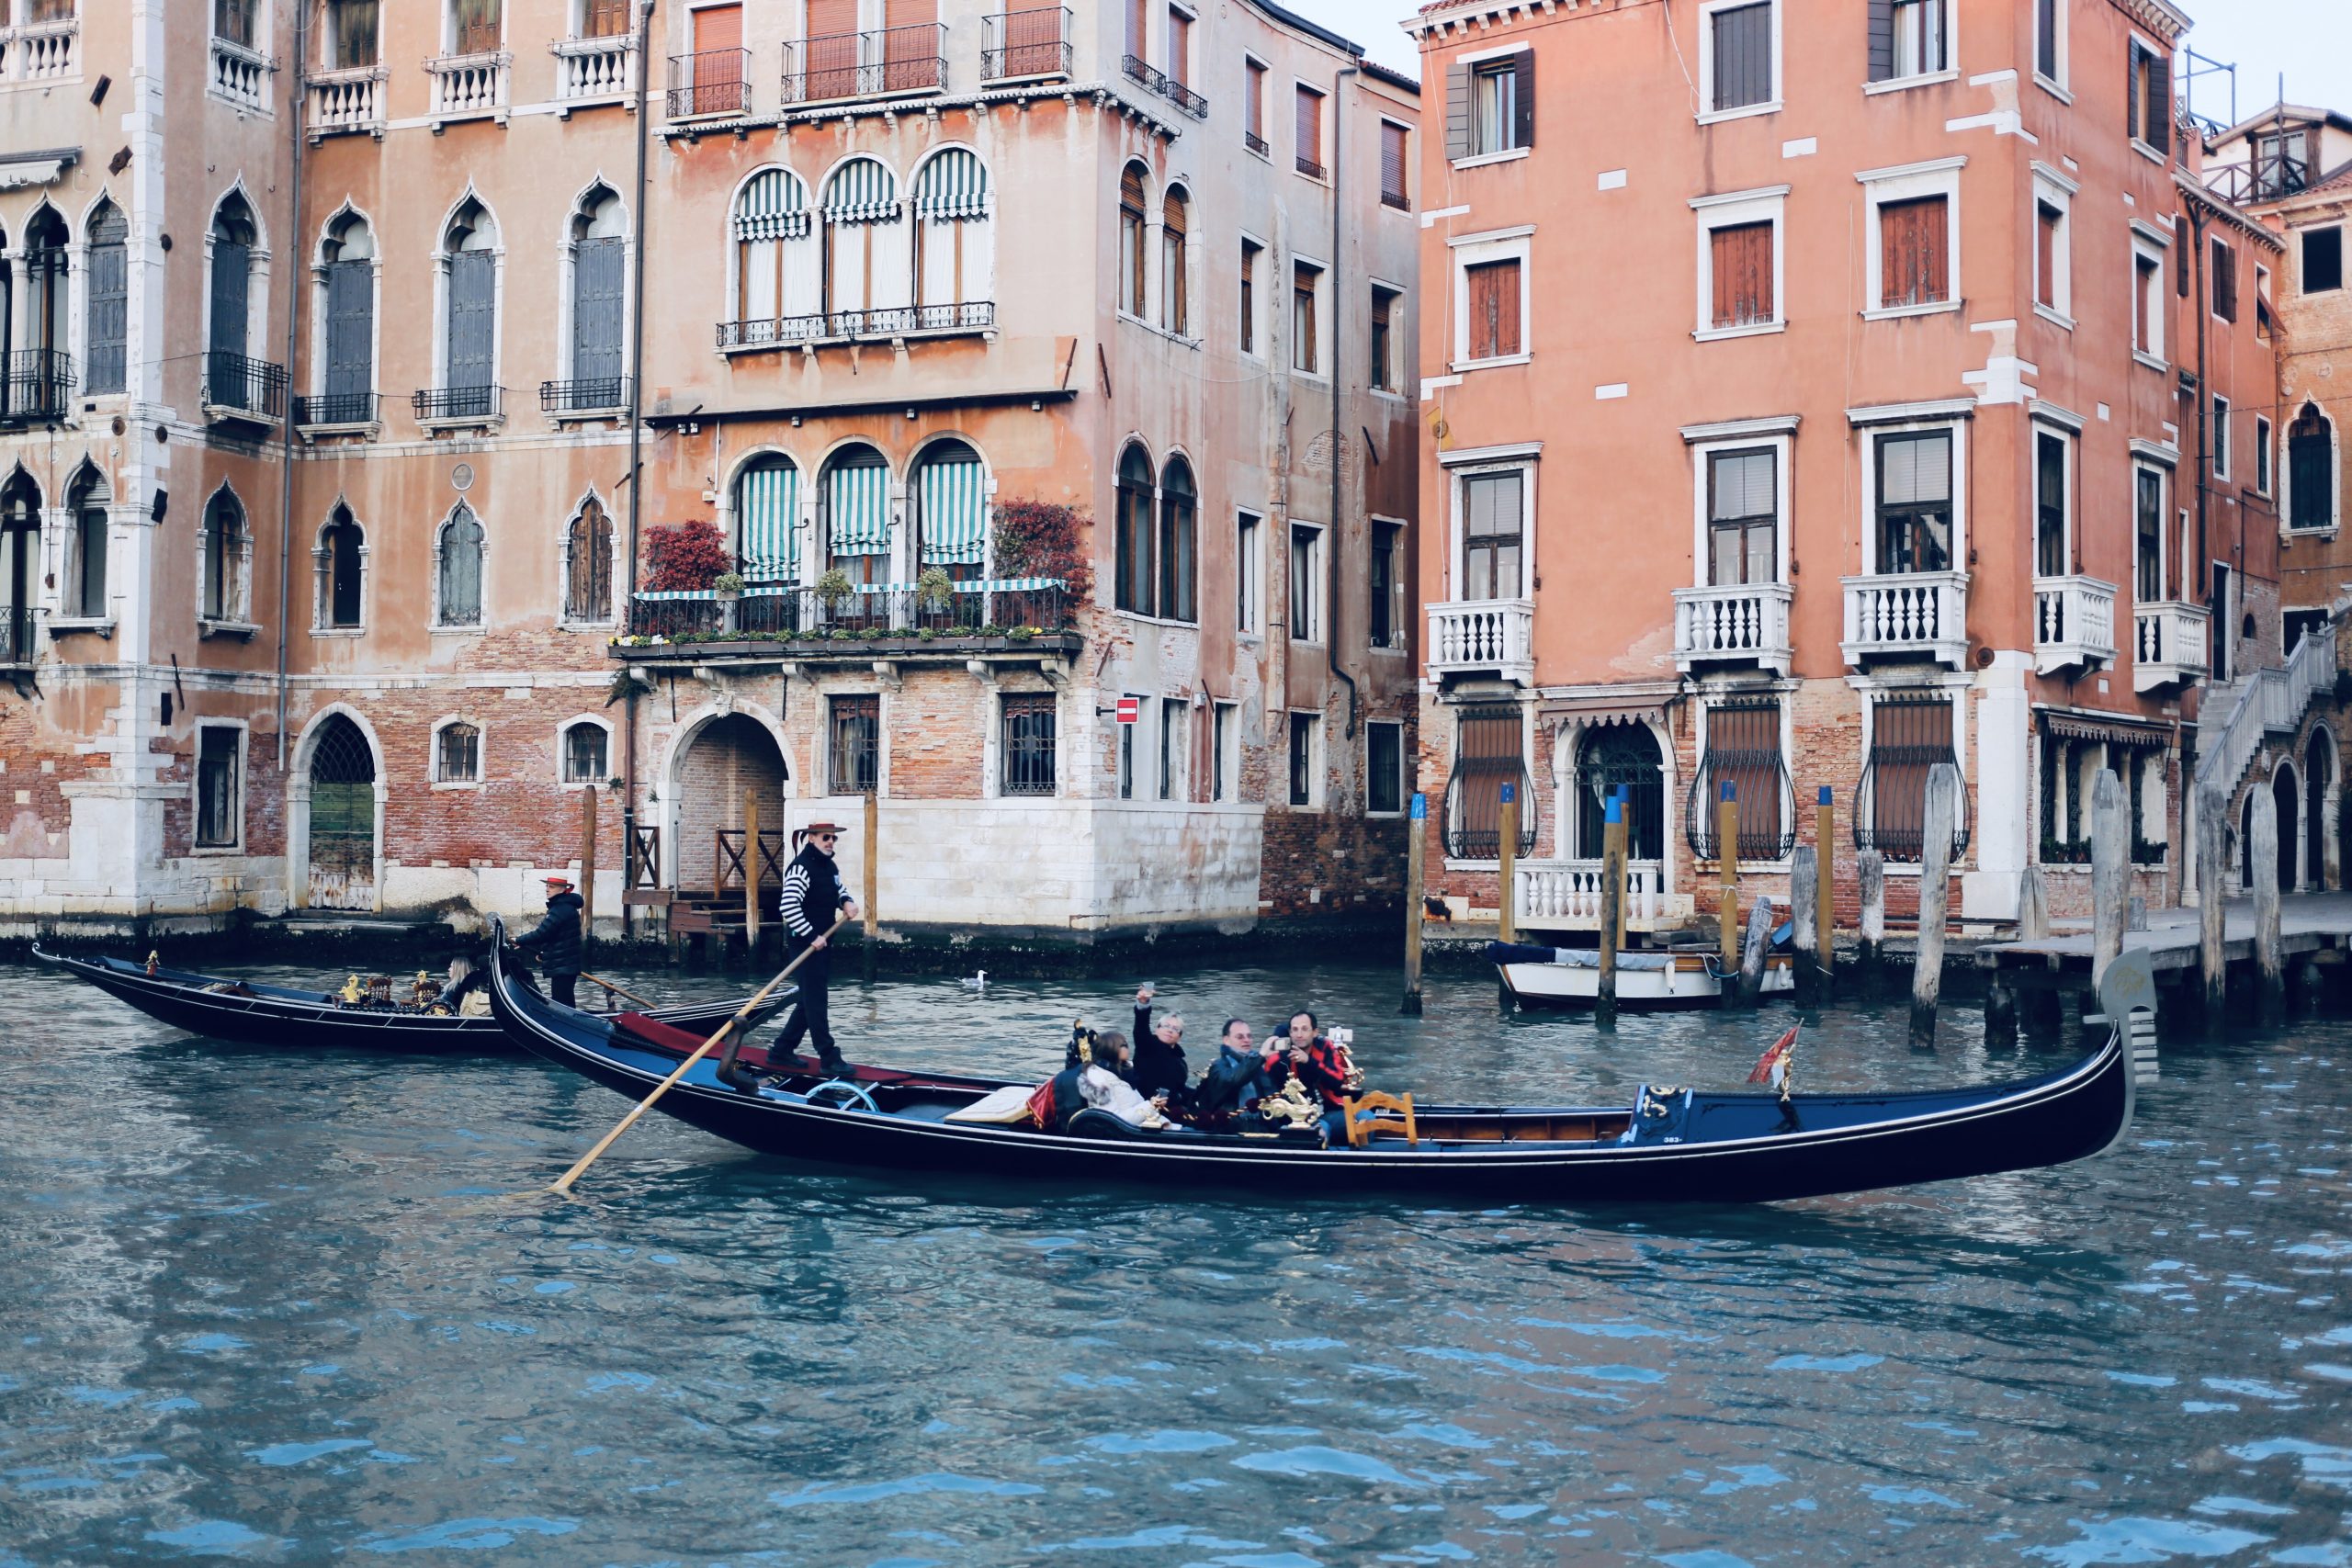 TravelMagazine.org: Venice